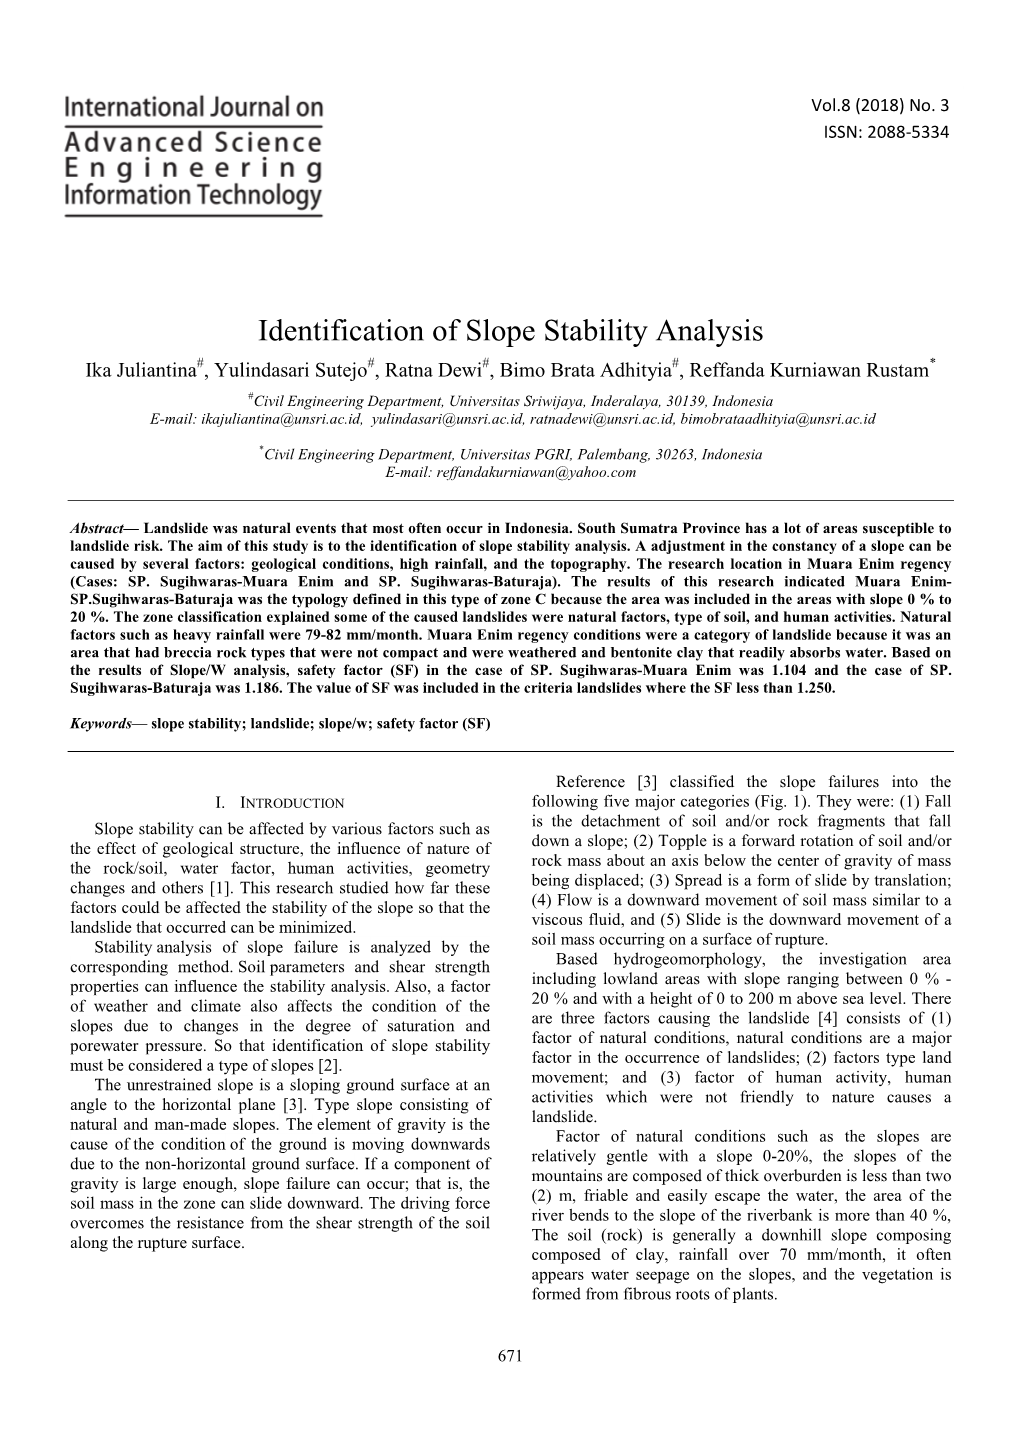 Identification of Slope Stability Analysis